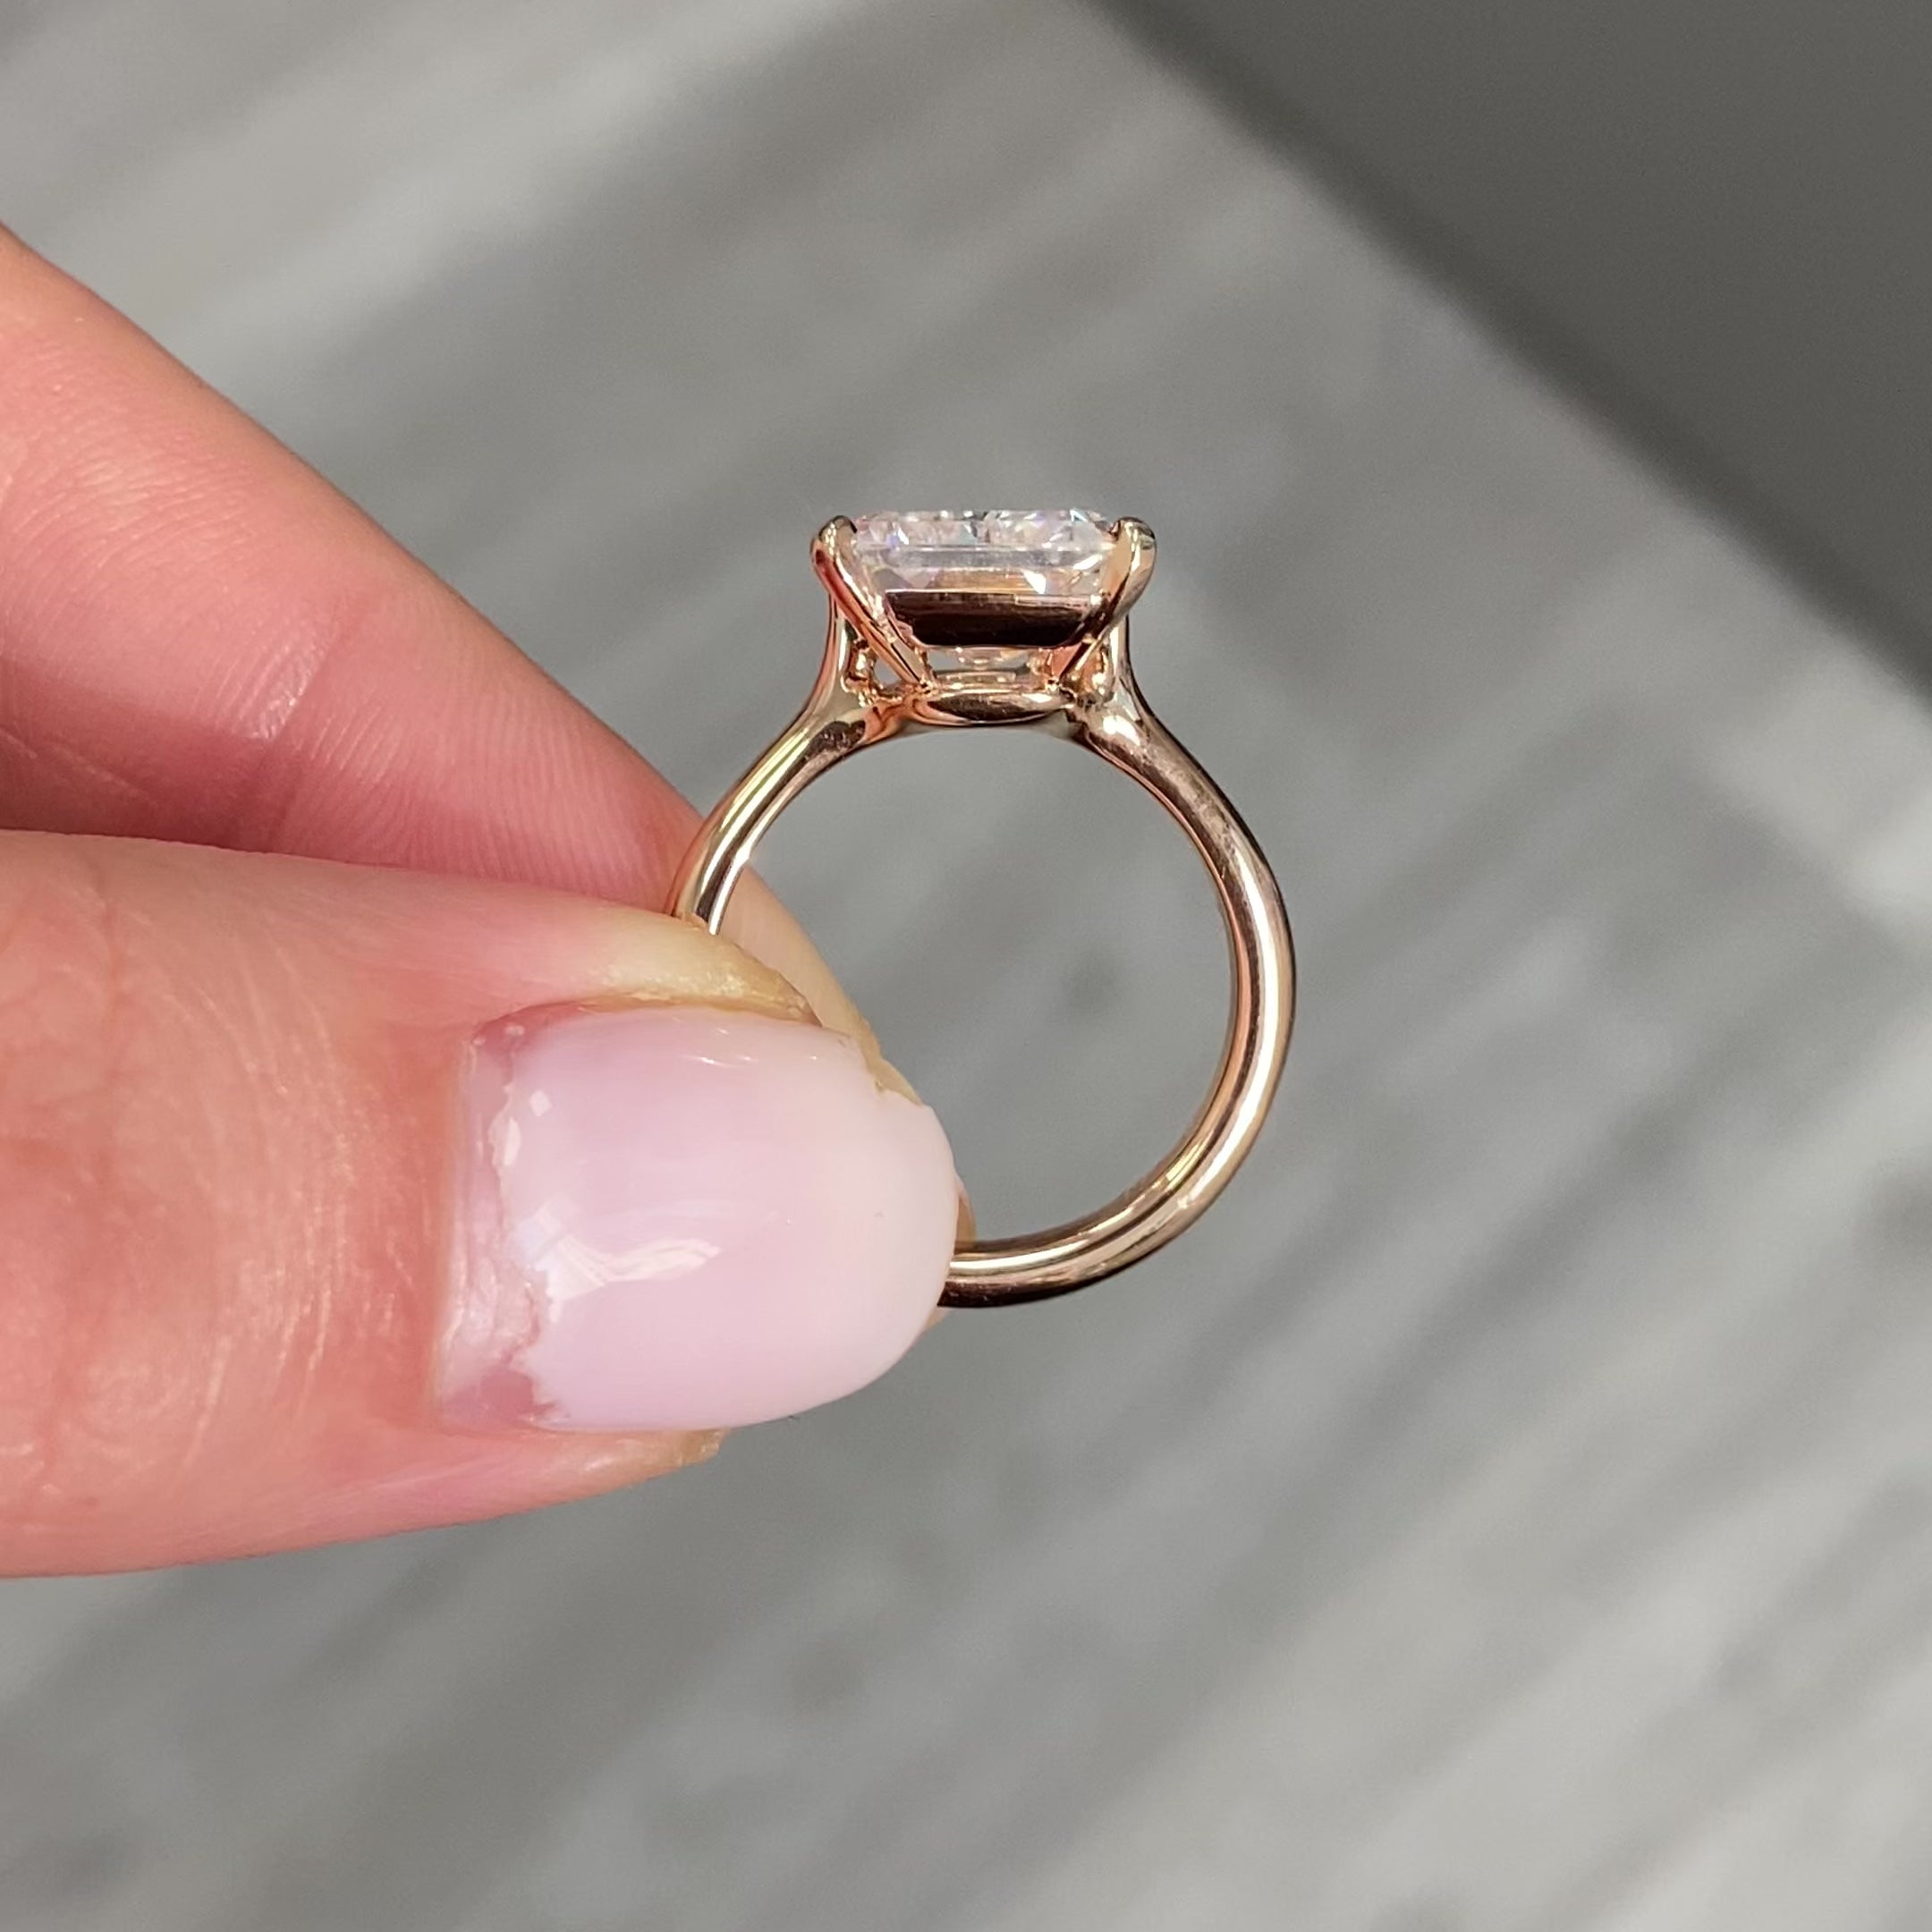 6ct Pink Internally Flawless (IF) Emerald Cut Diamond Ring